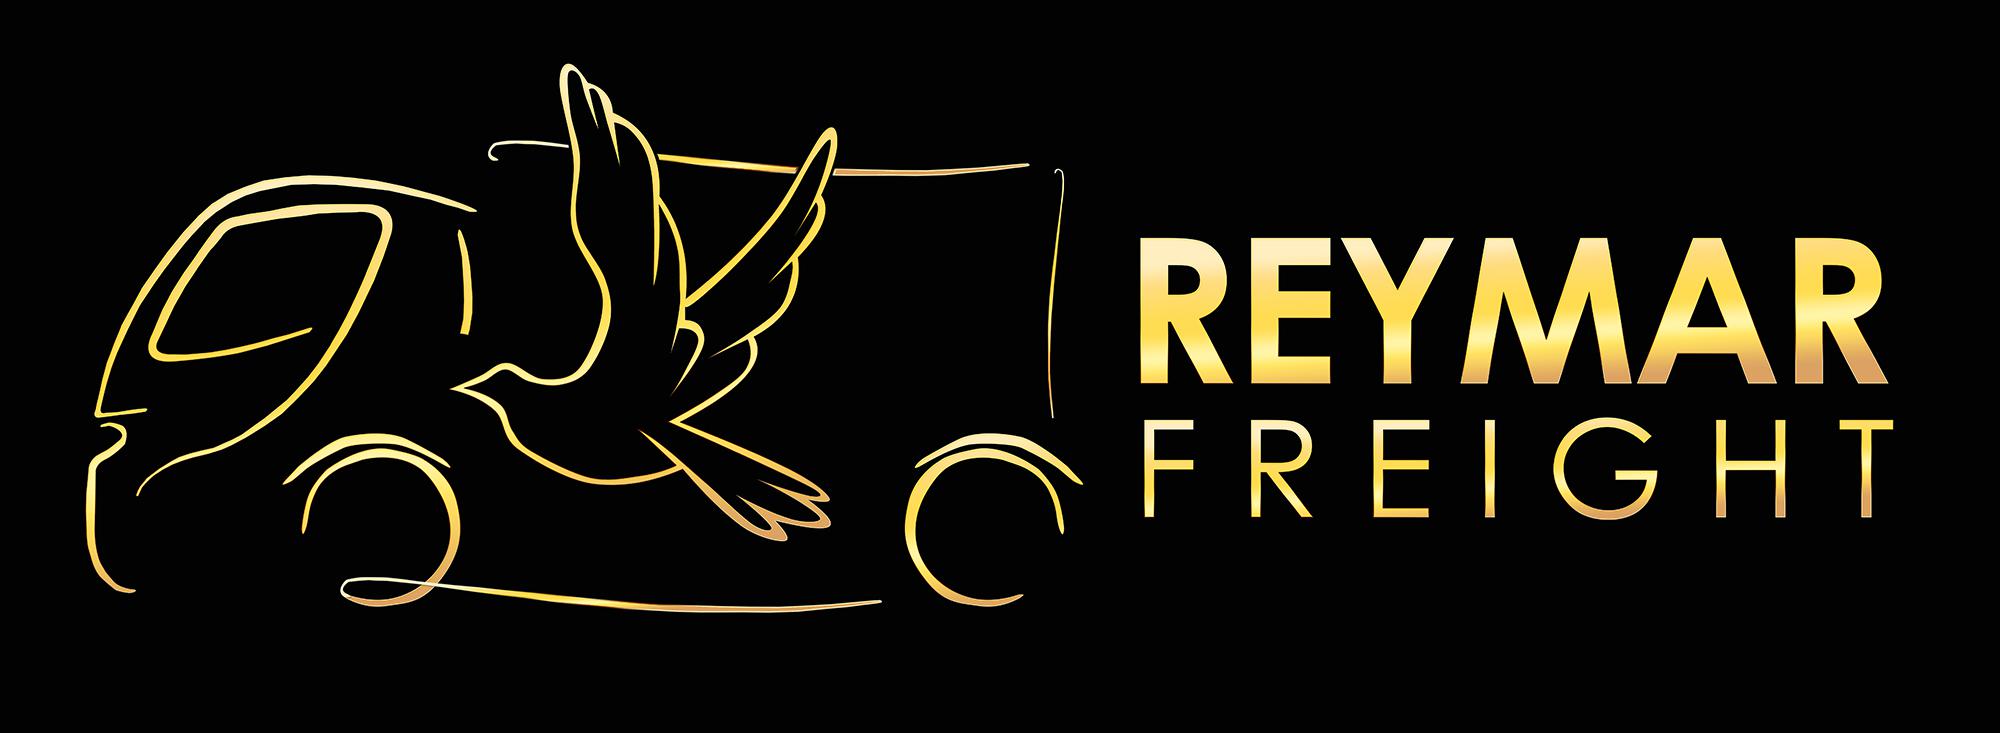 Reymar Freight Logo